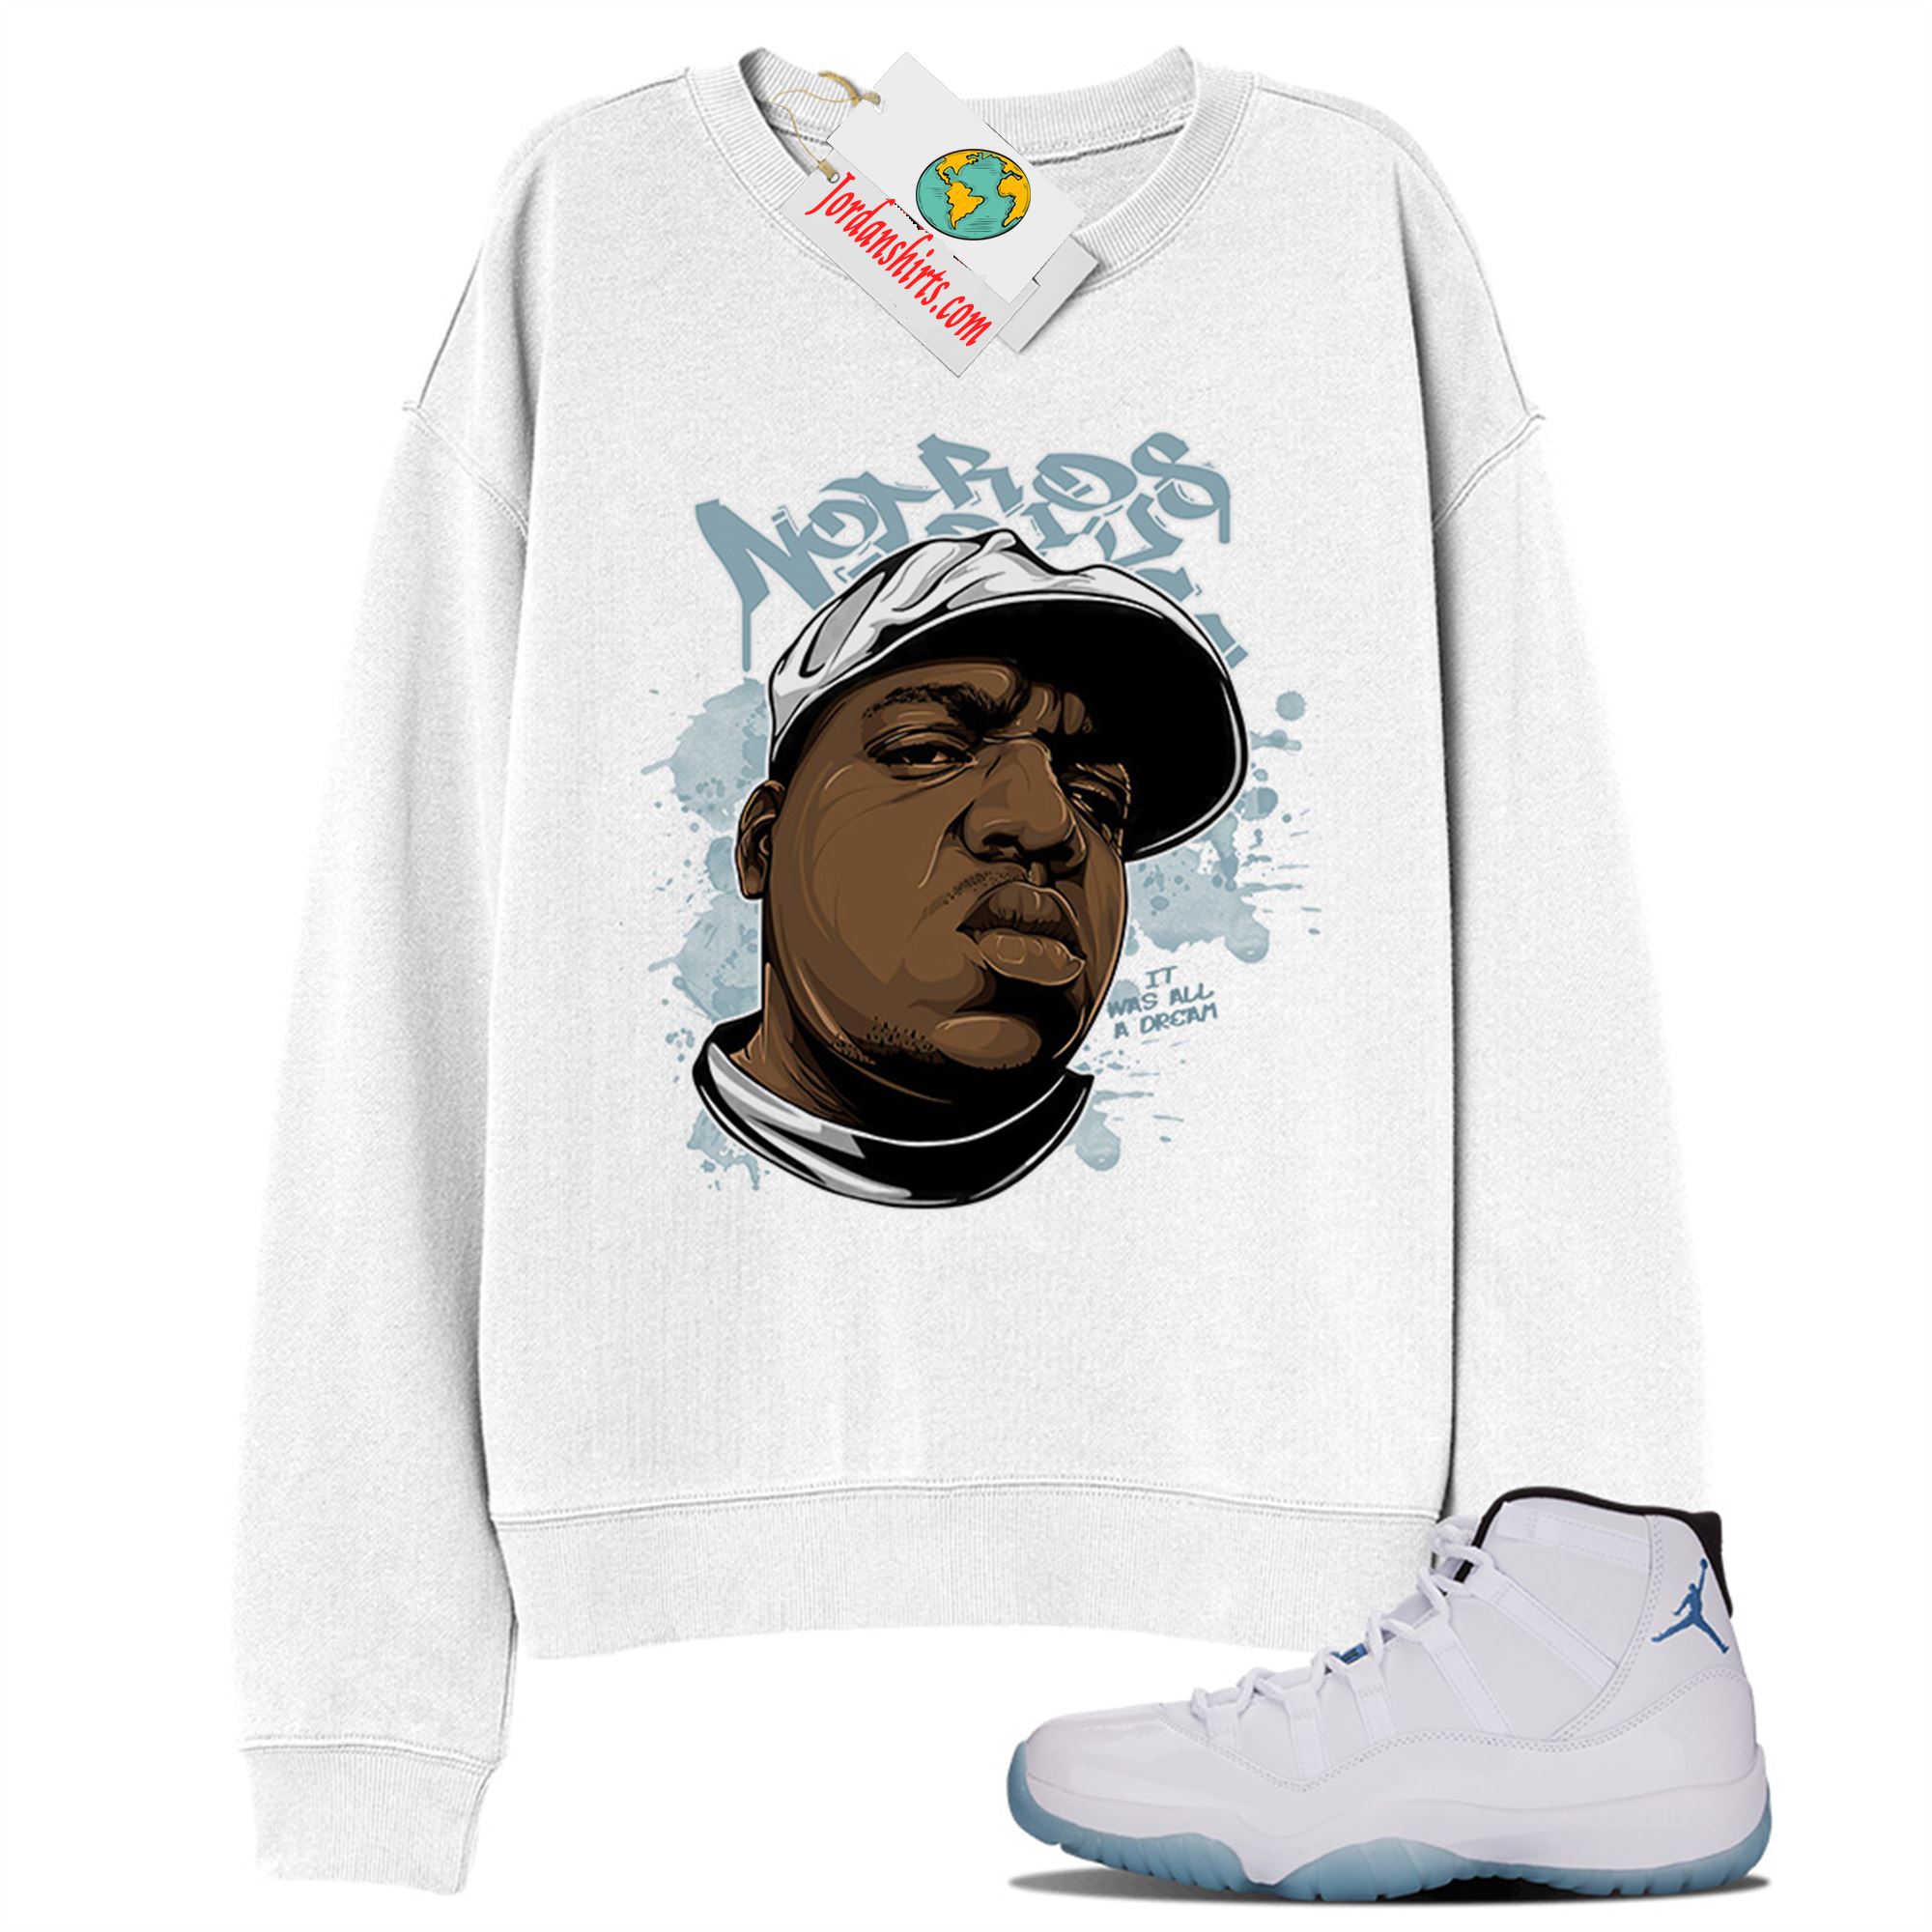 Jordan 11 Sweatshirt, Notorious Big White Sweatshirt Air Jordan 11 Legend Blue 11s Plus Size Up To 5xl